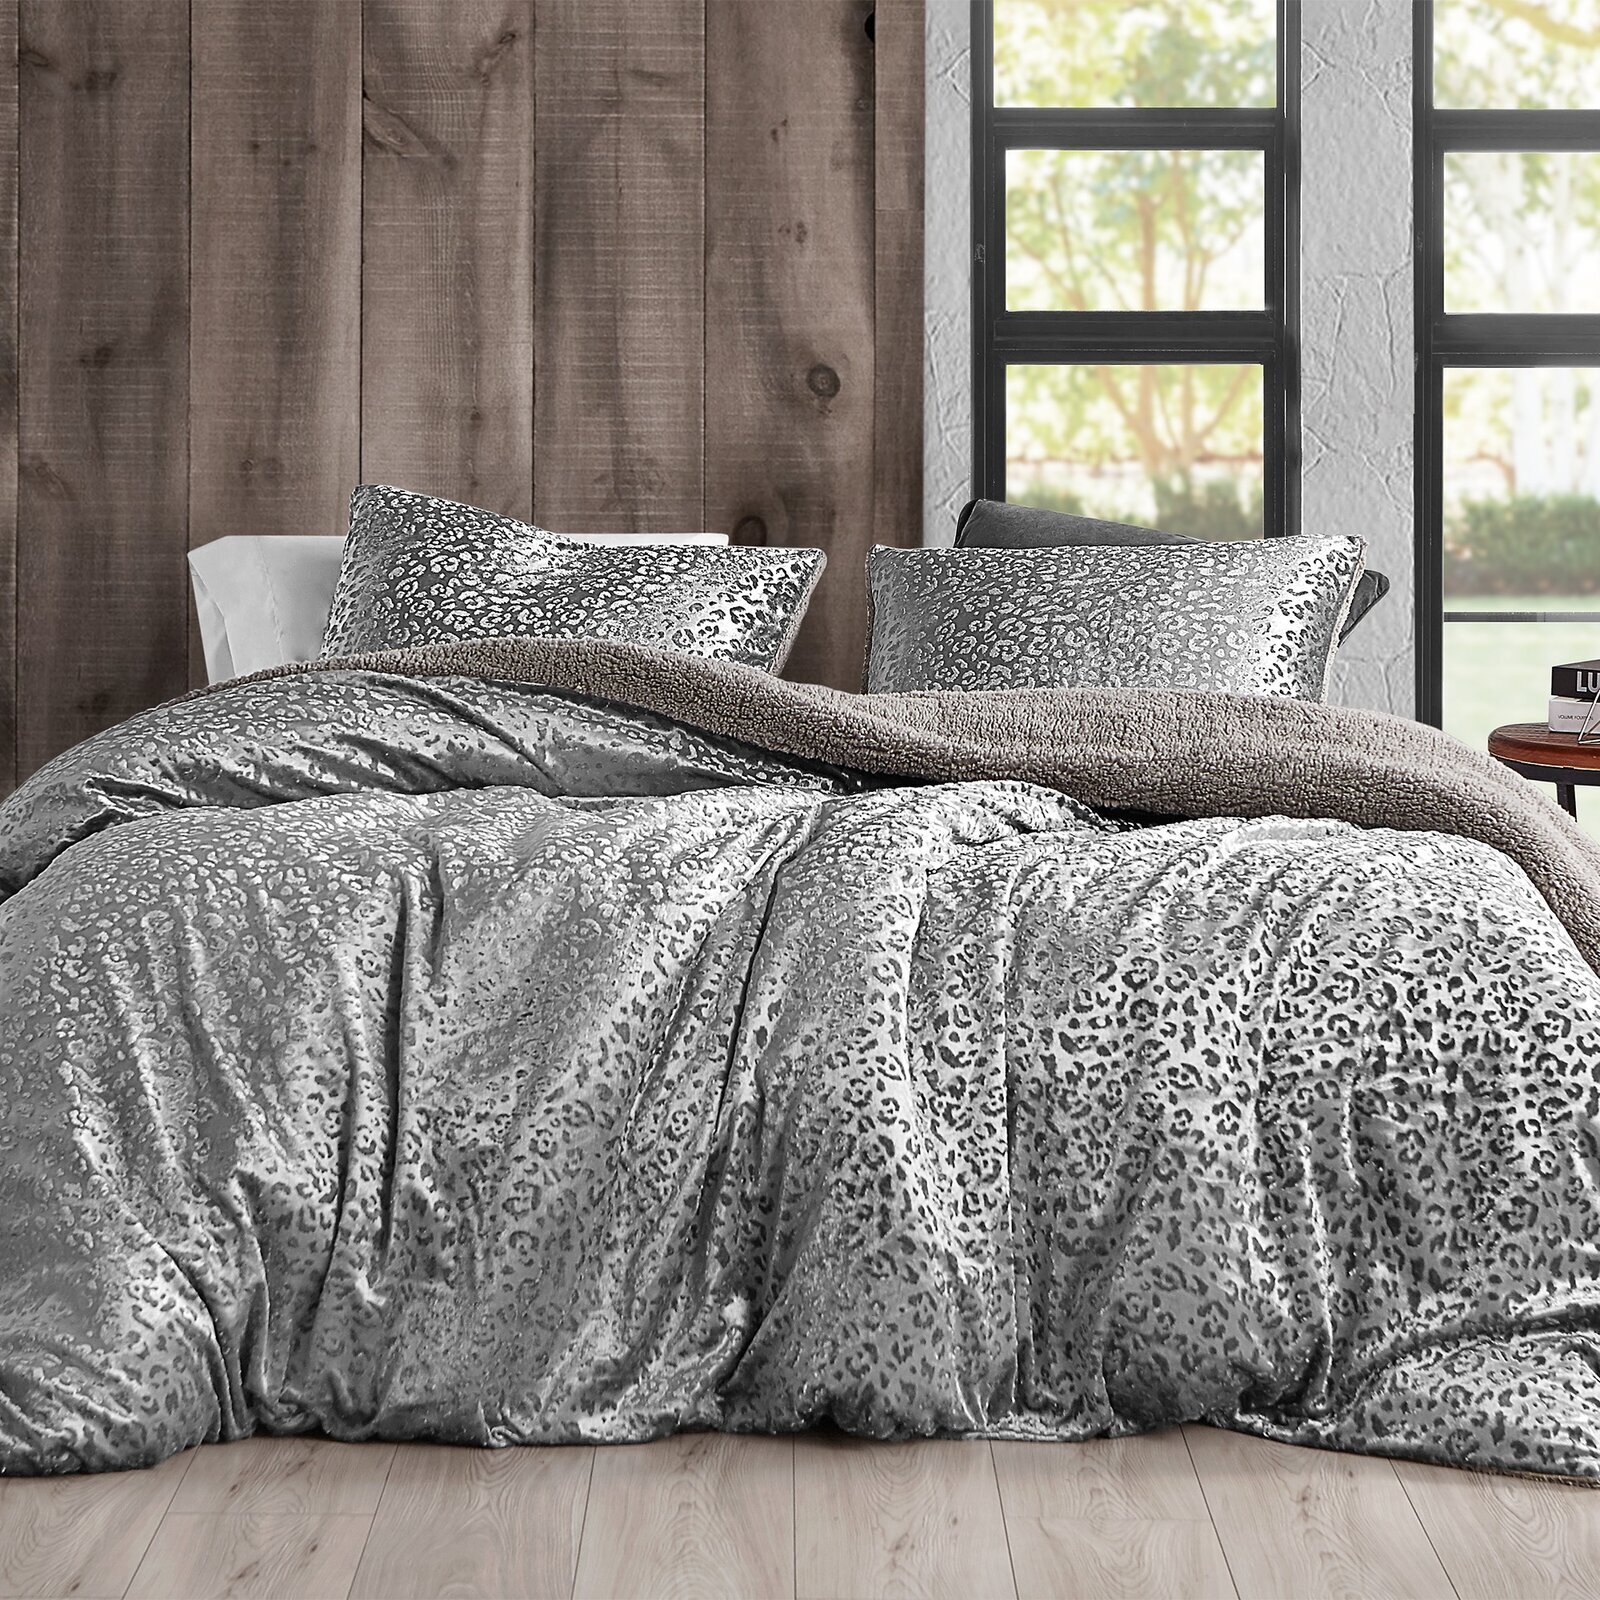 Shimmery animal print comforter set